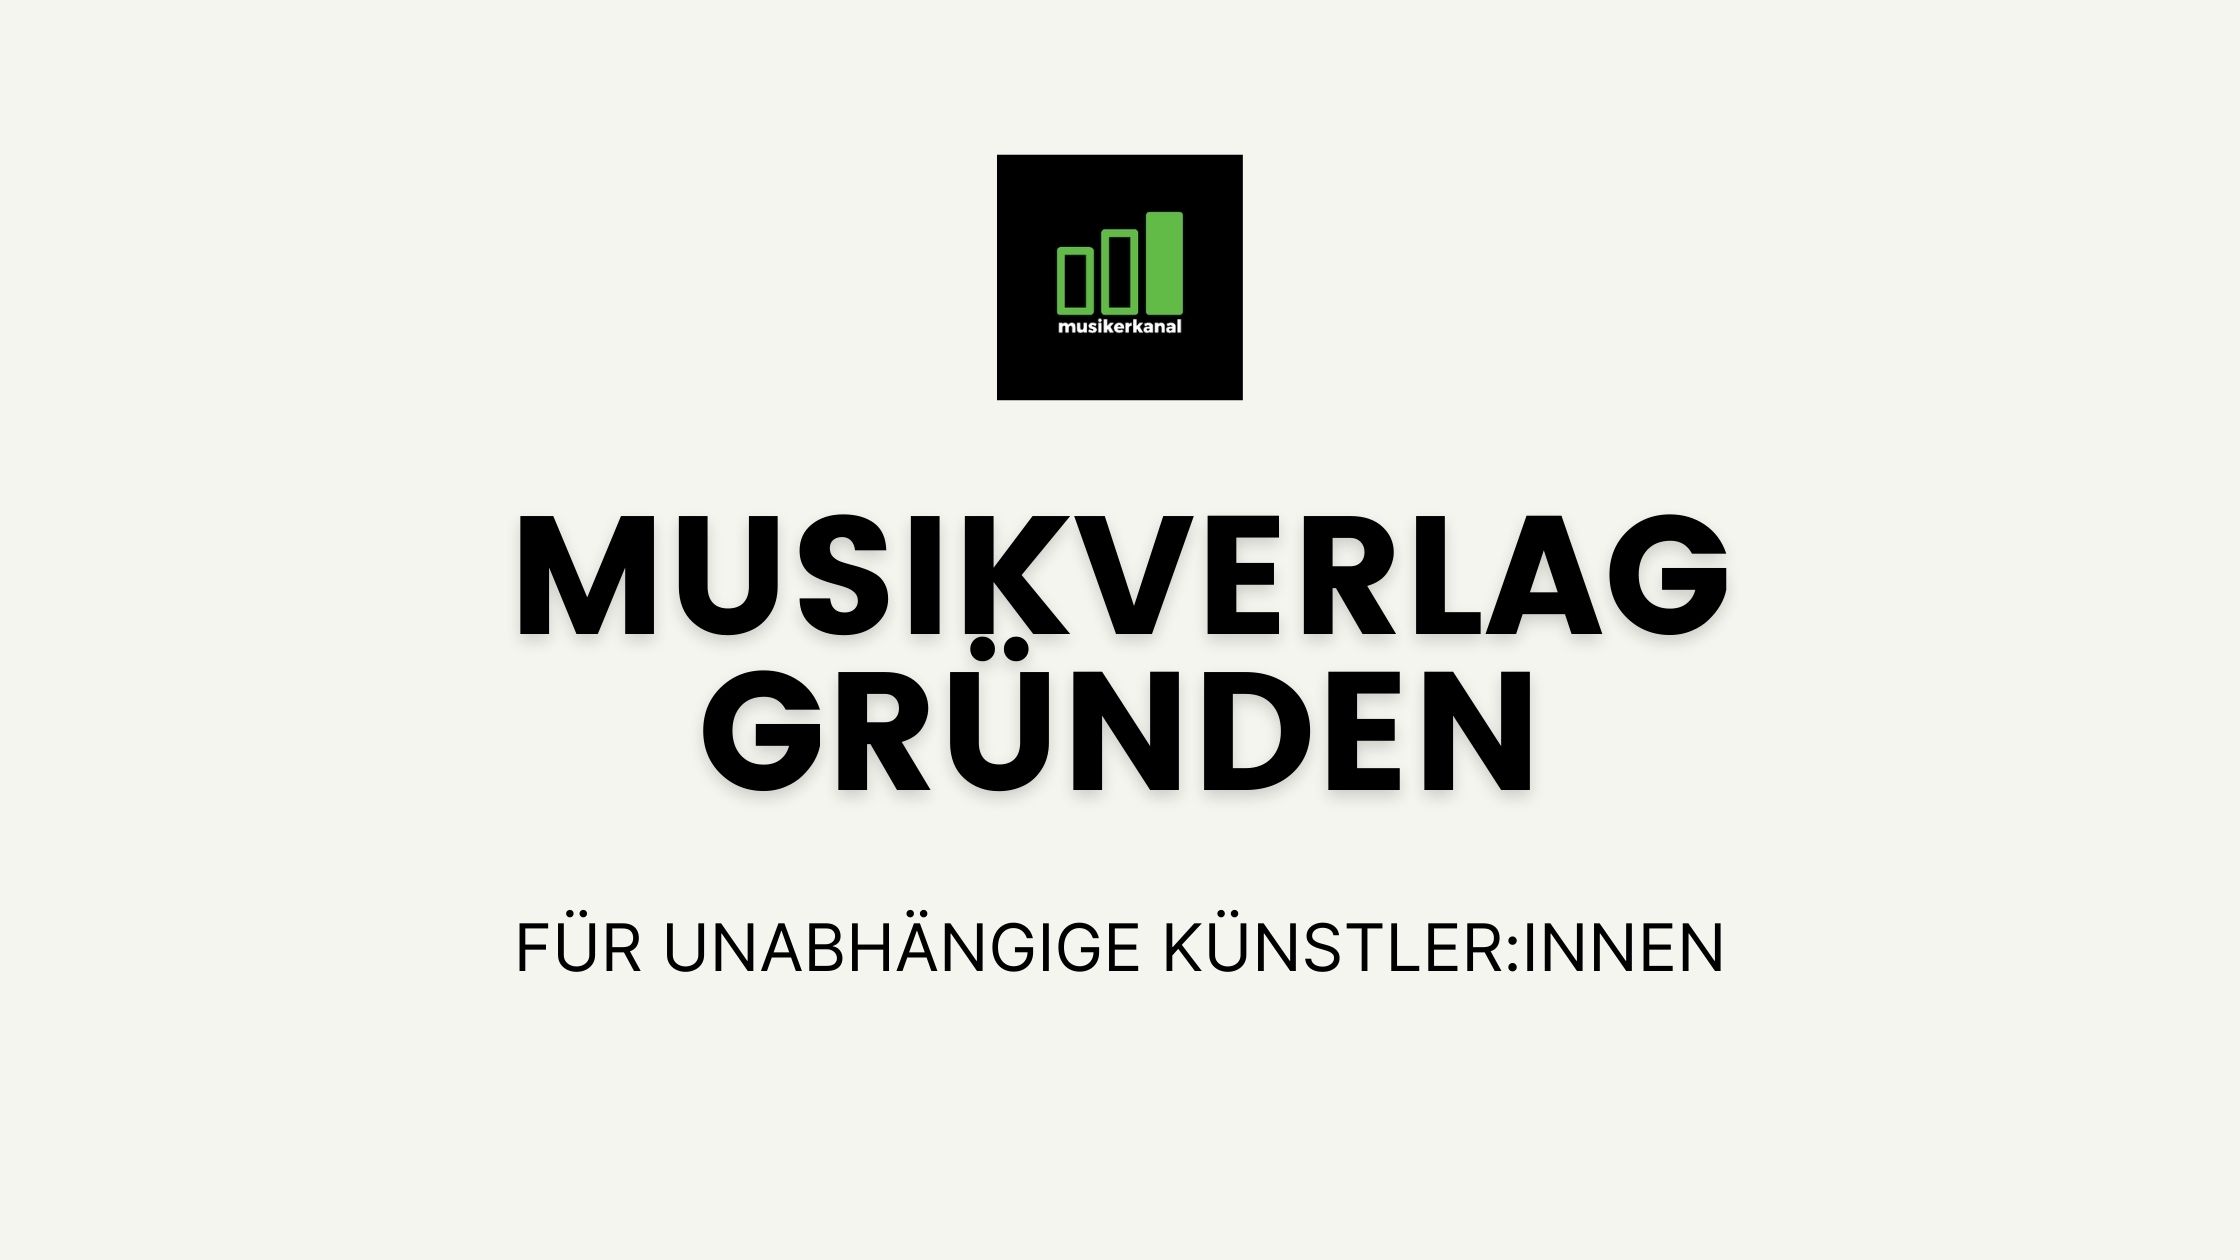 Musikverlag gründen